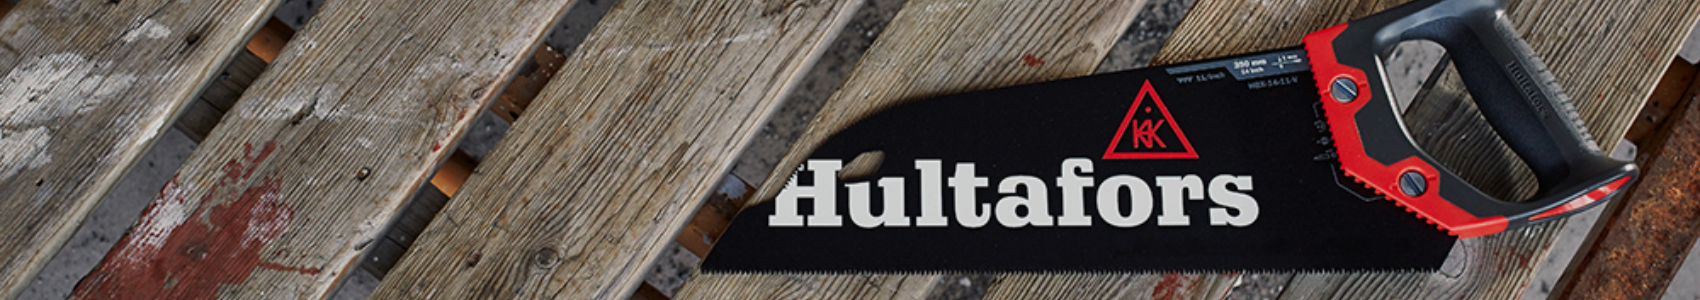 Transparent Hultafors logo banner